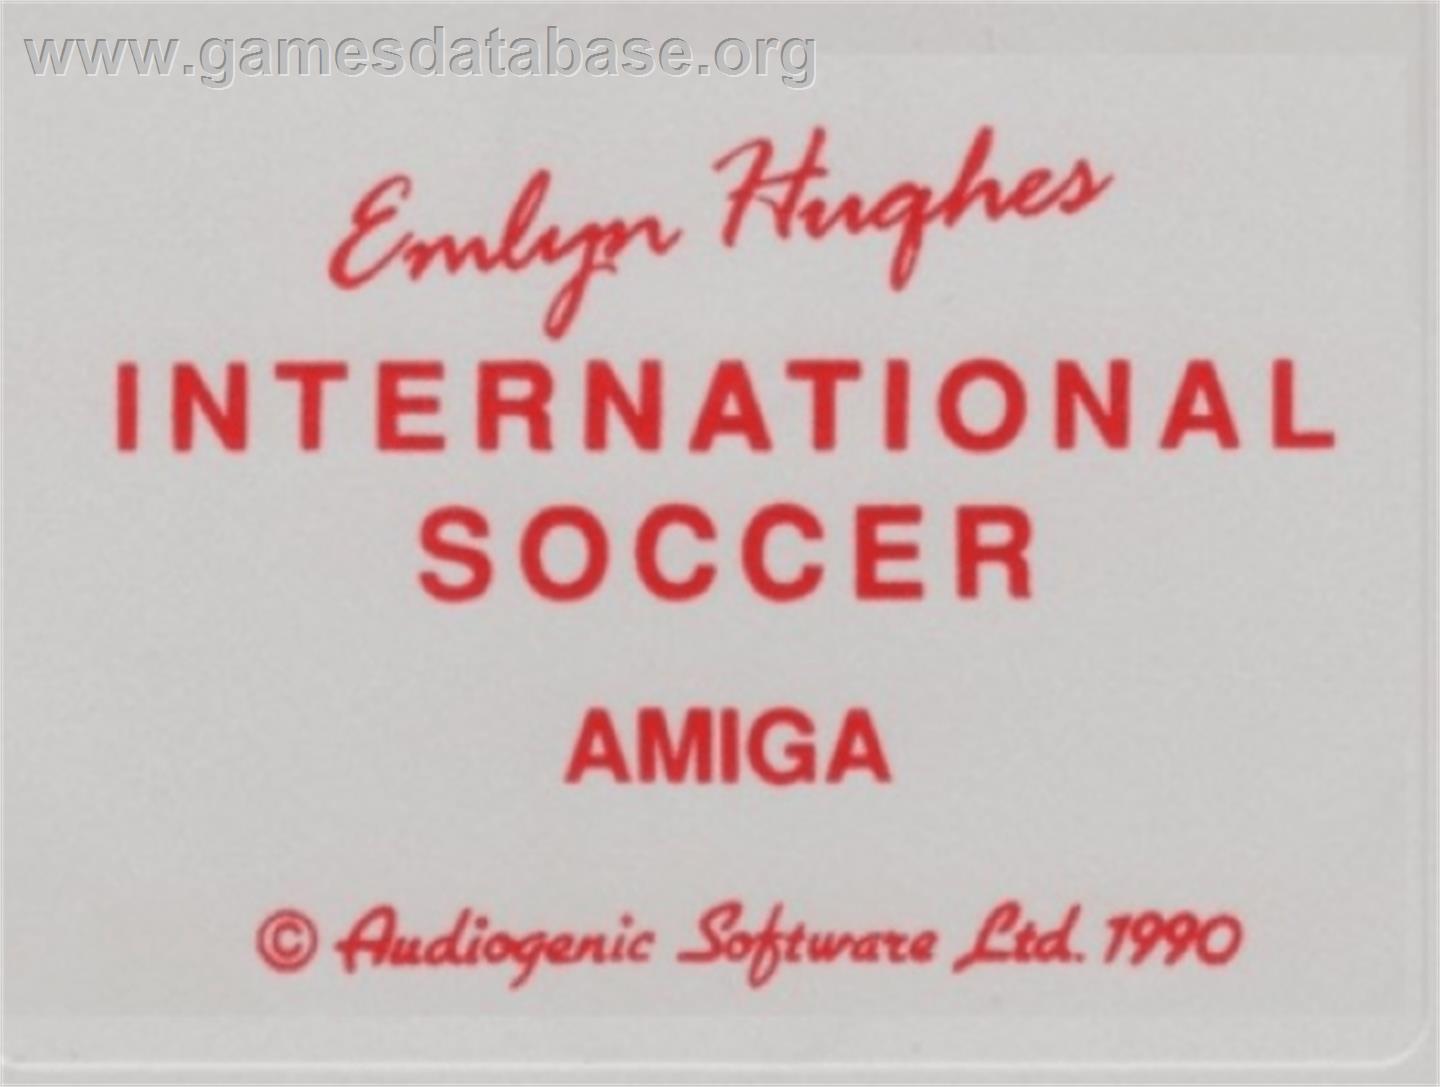 Emlyn Hughes International Soccer - Commodore Amiga - Artwork - Cartridge Top